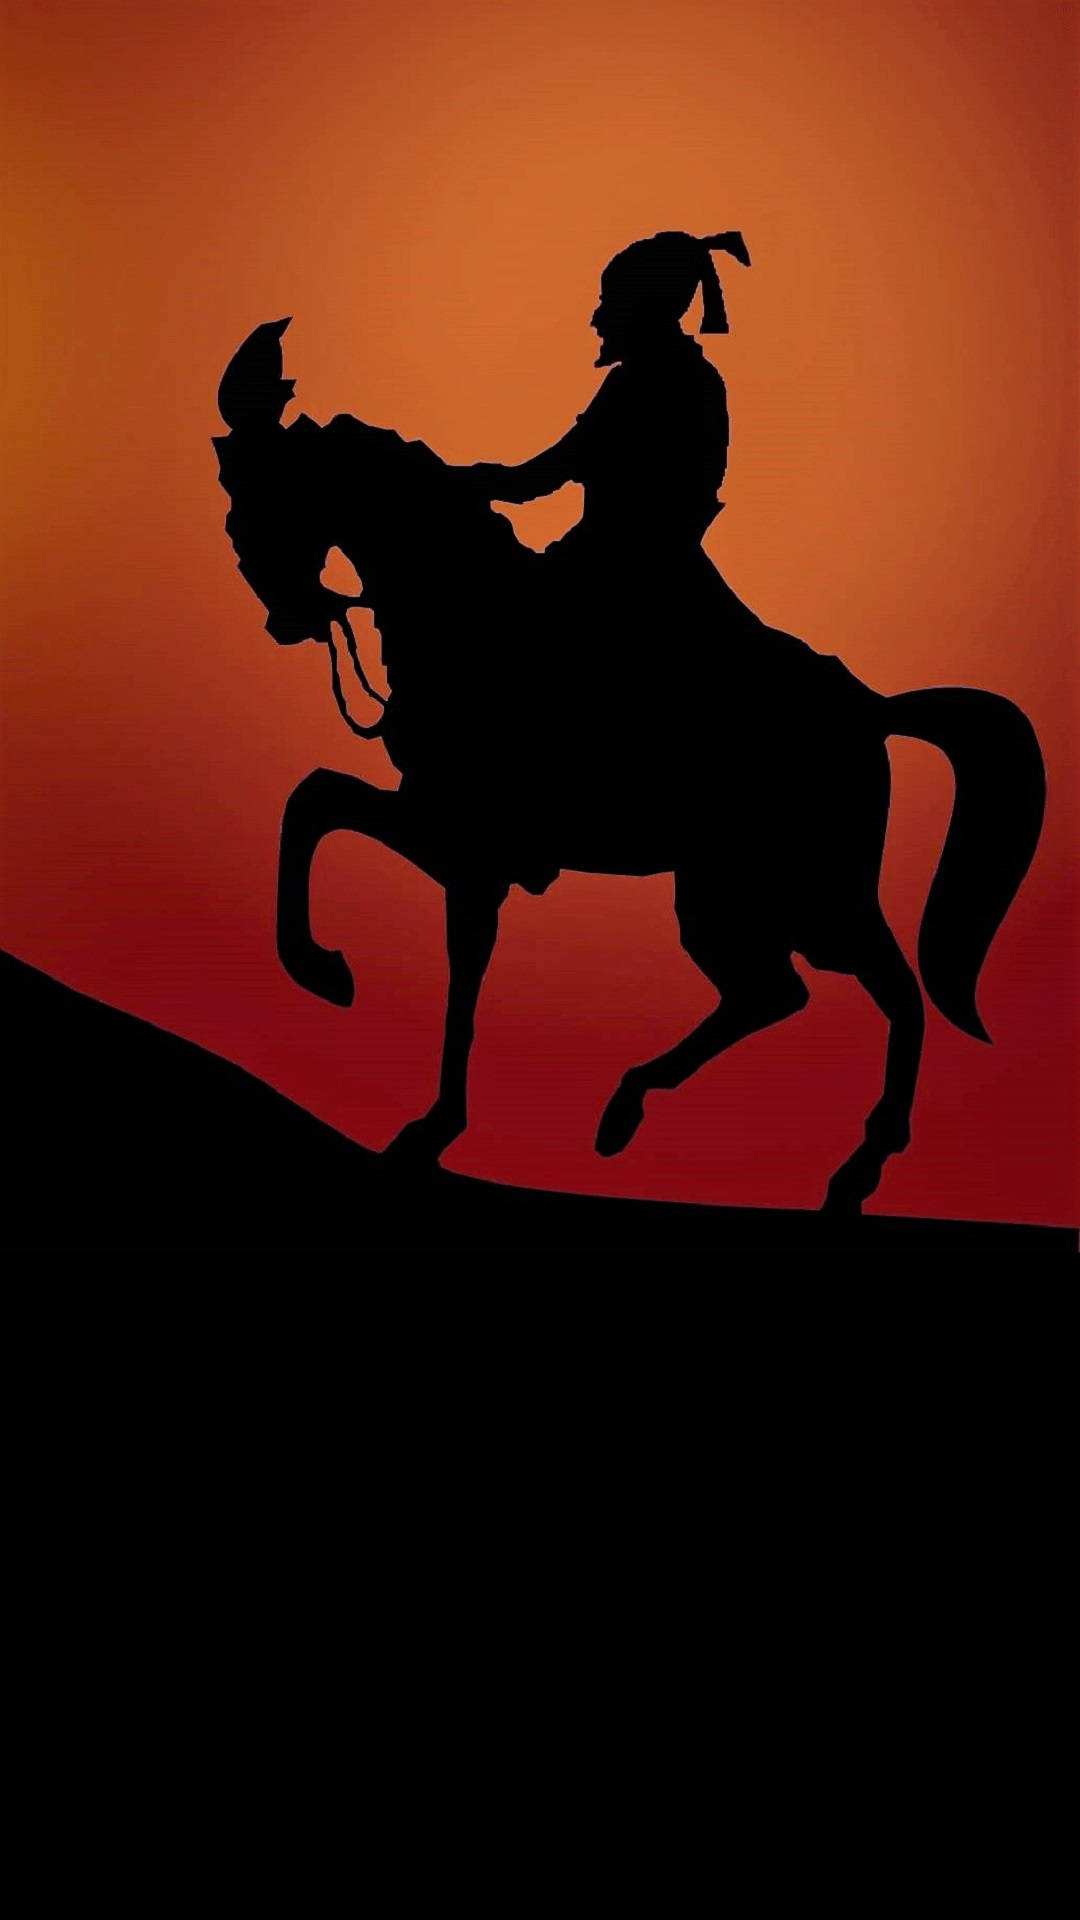 Shivaji Maharaj Riding Horse Uphill Hd Wallpaper